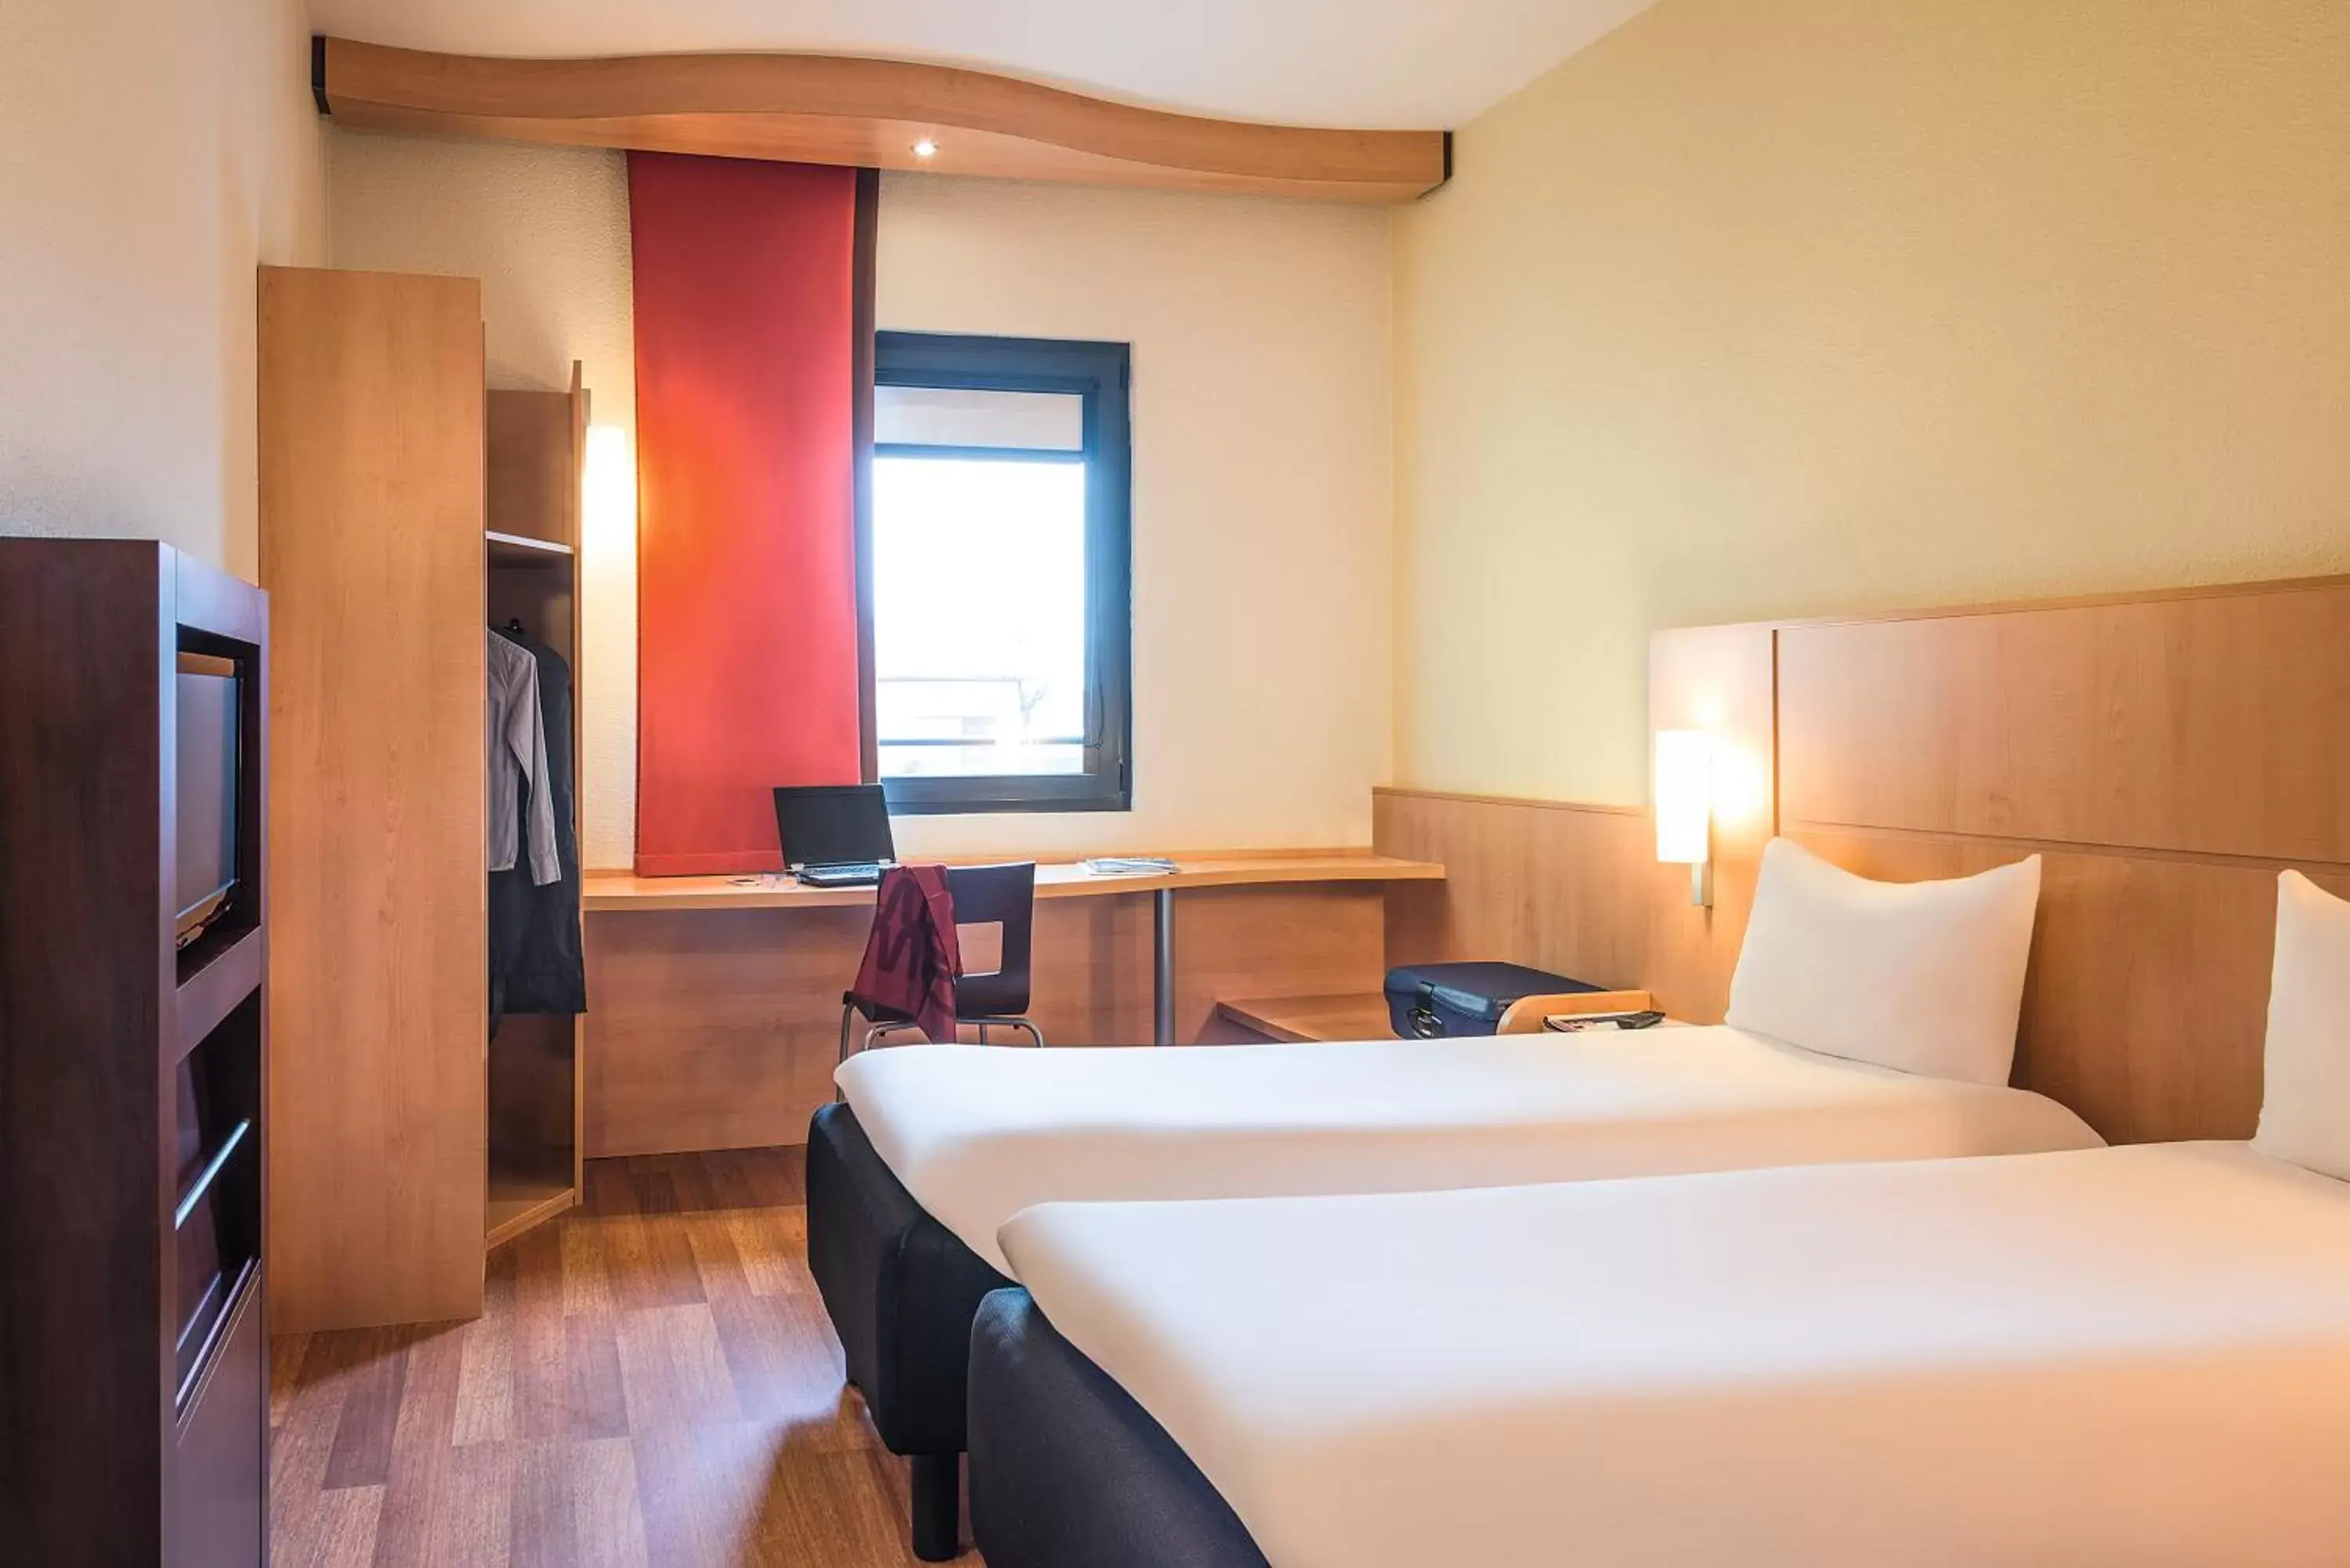 Bedroom, Room Photo in Hotel Ibis Milano Malpensa